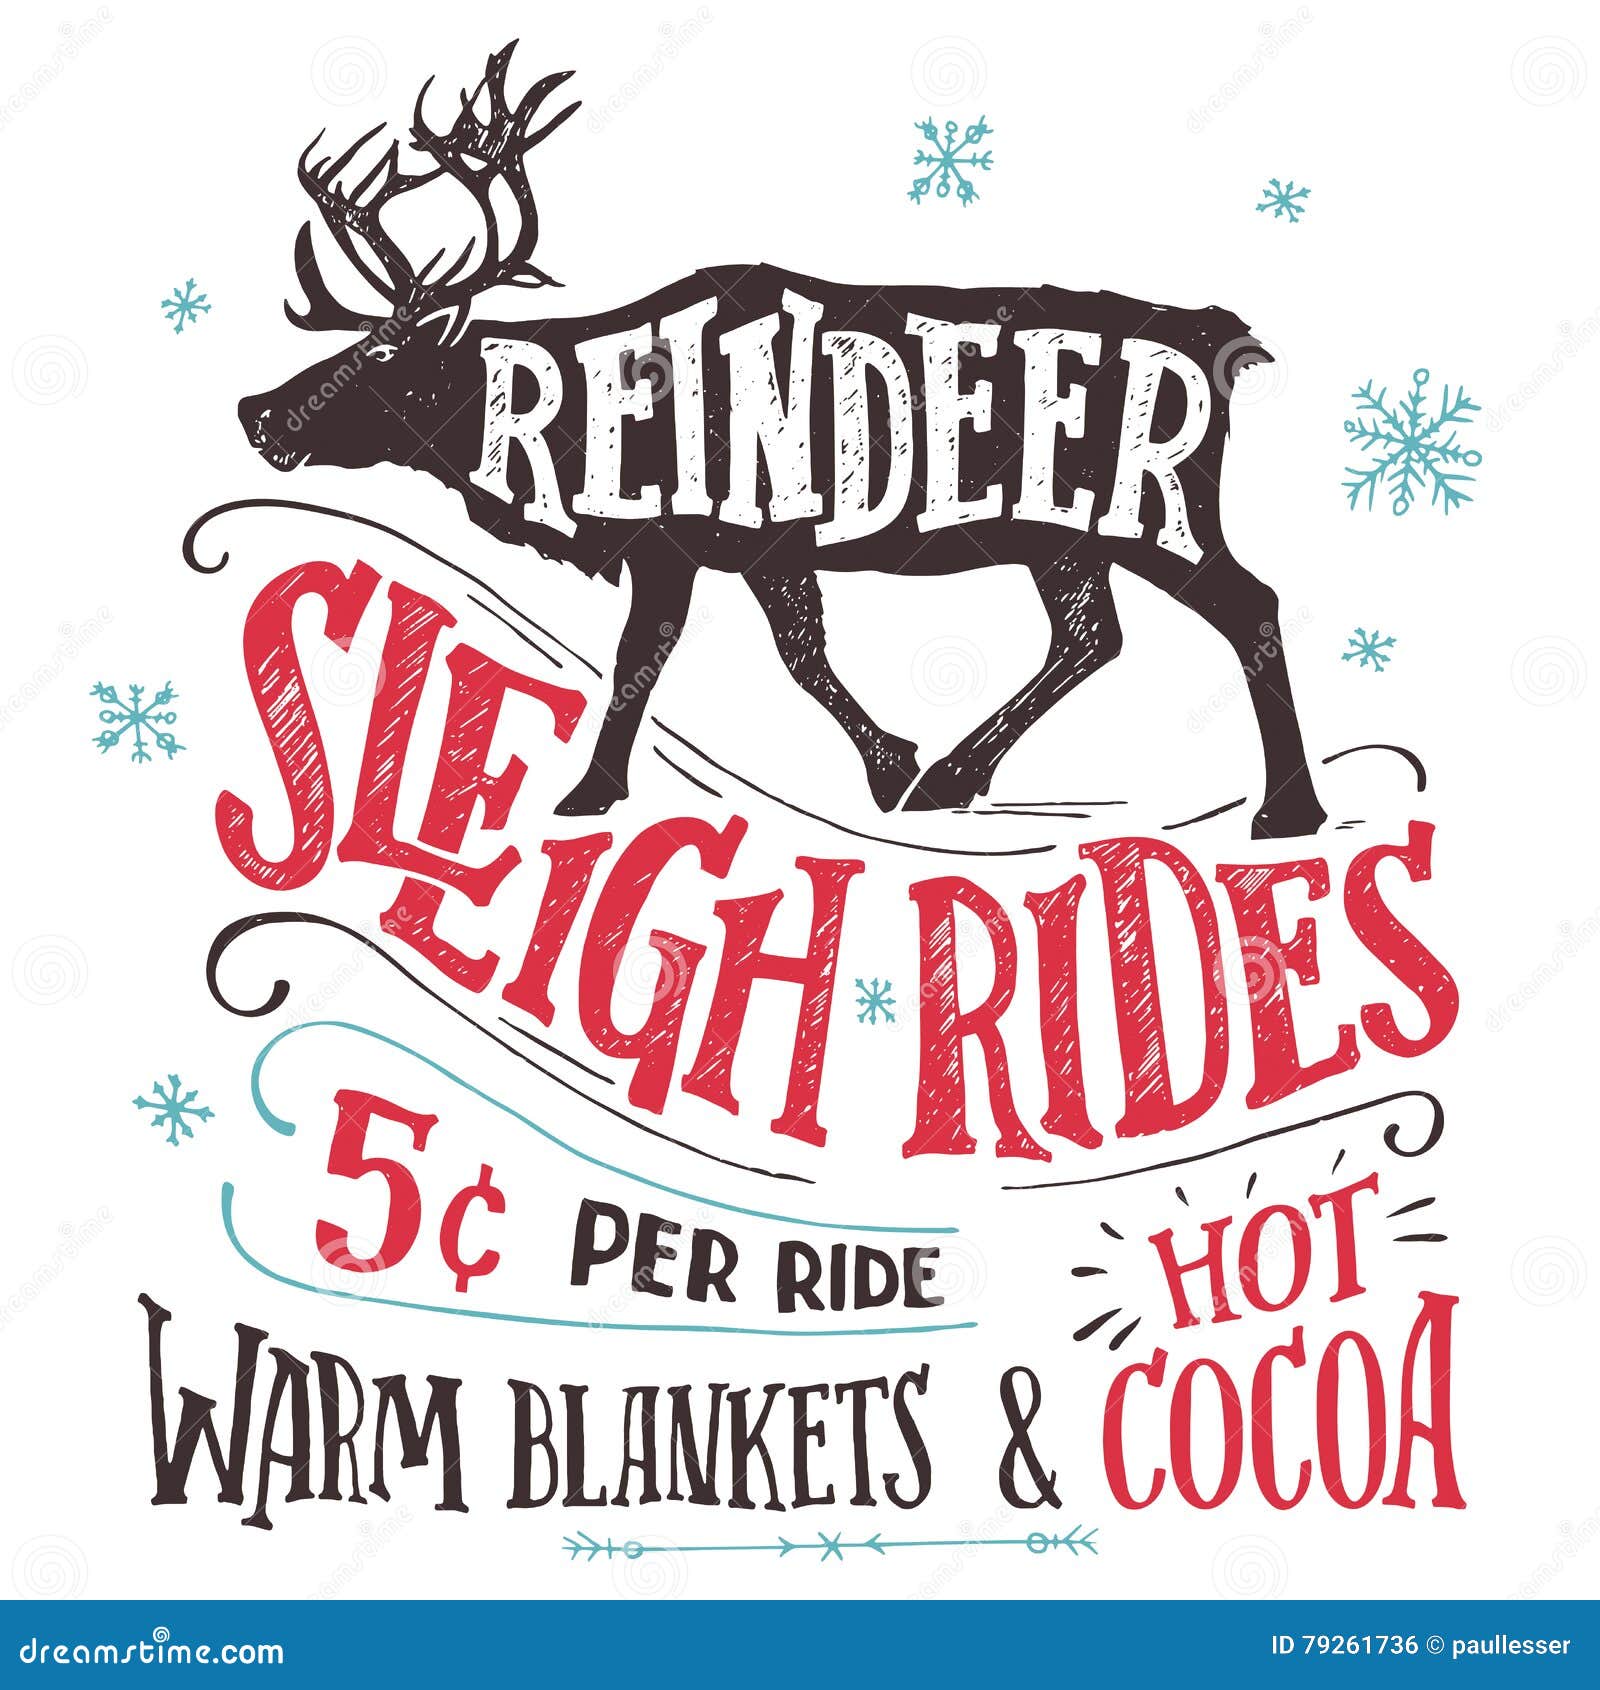 reindeer sleigh rides signboard